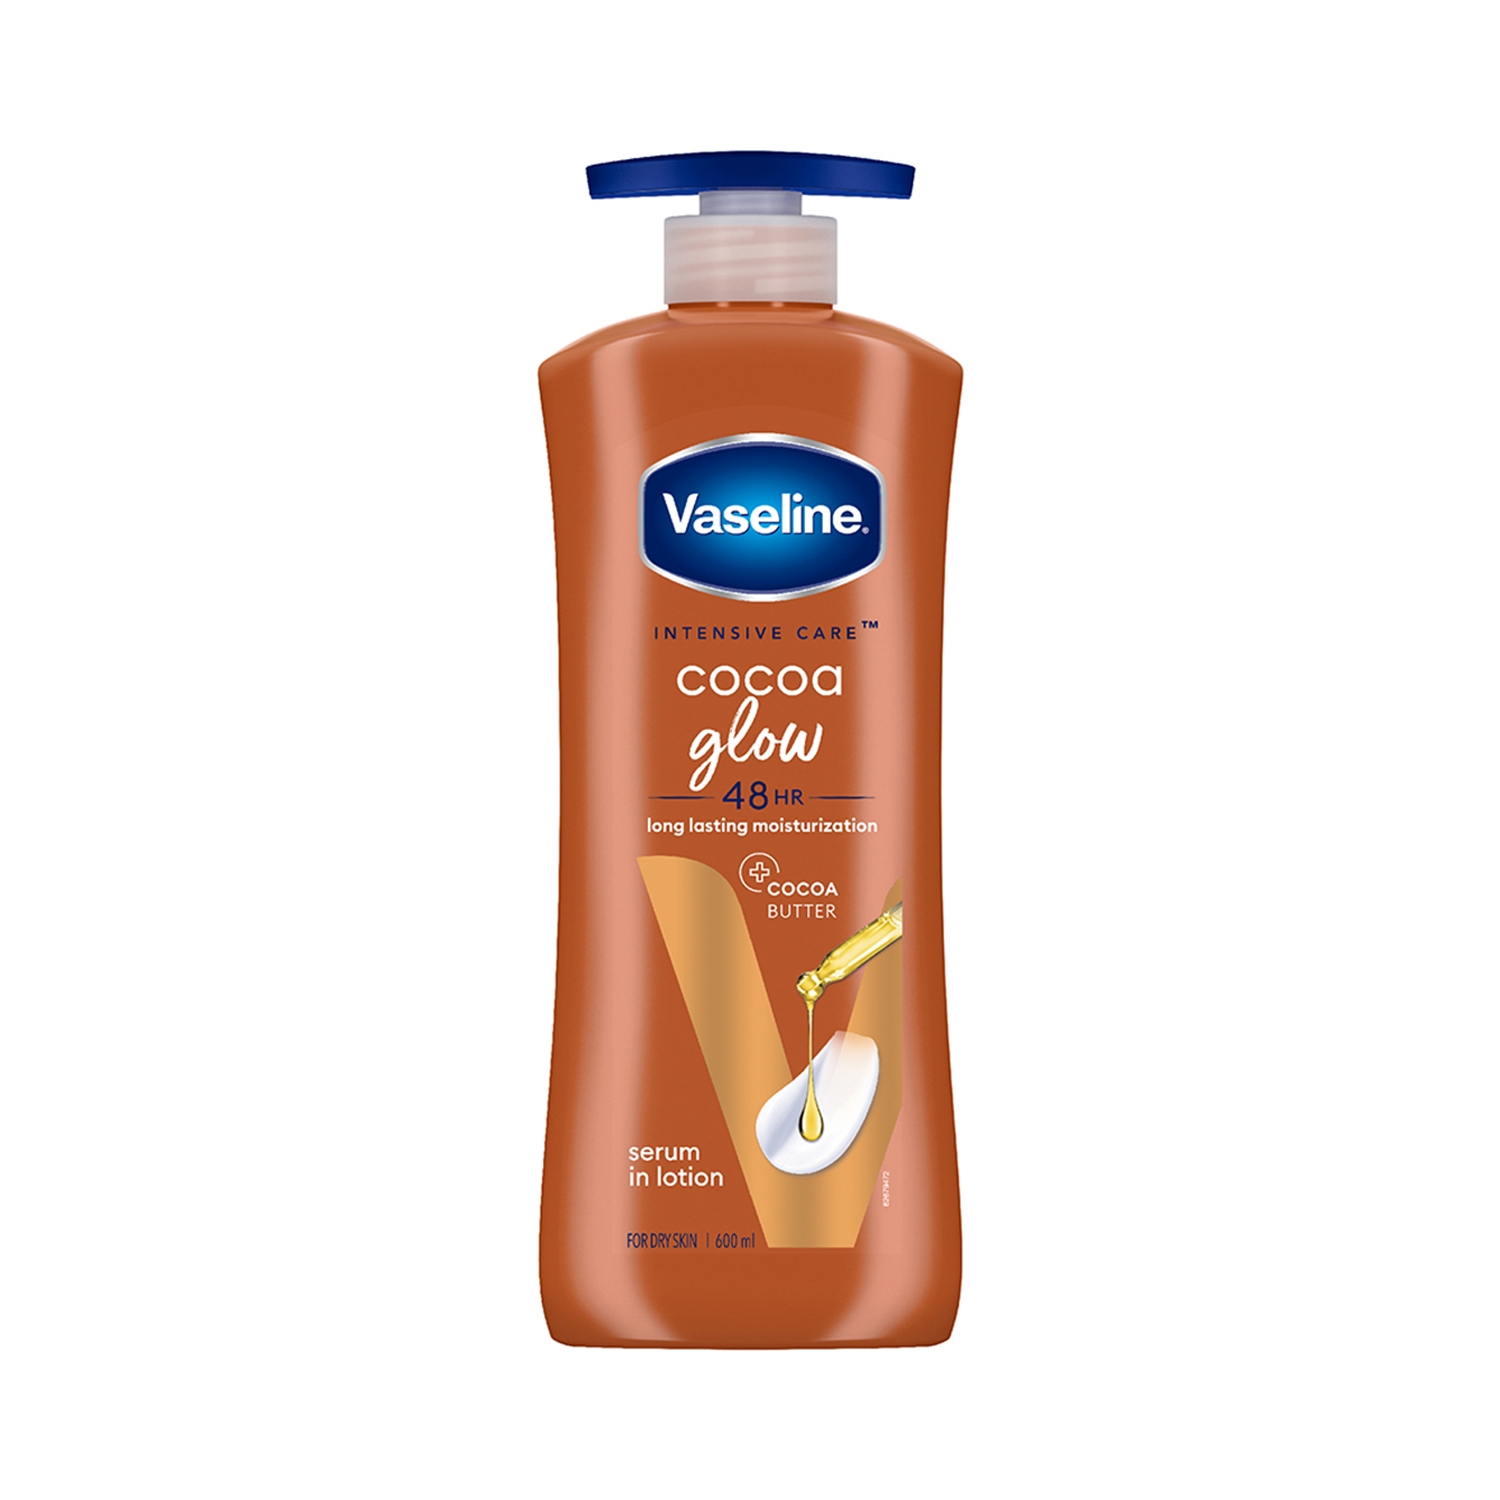 Vaseline | Vaseline Intensive Care Cocoa Glow Body Lotion - (600ml)